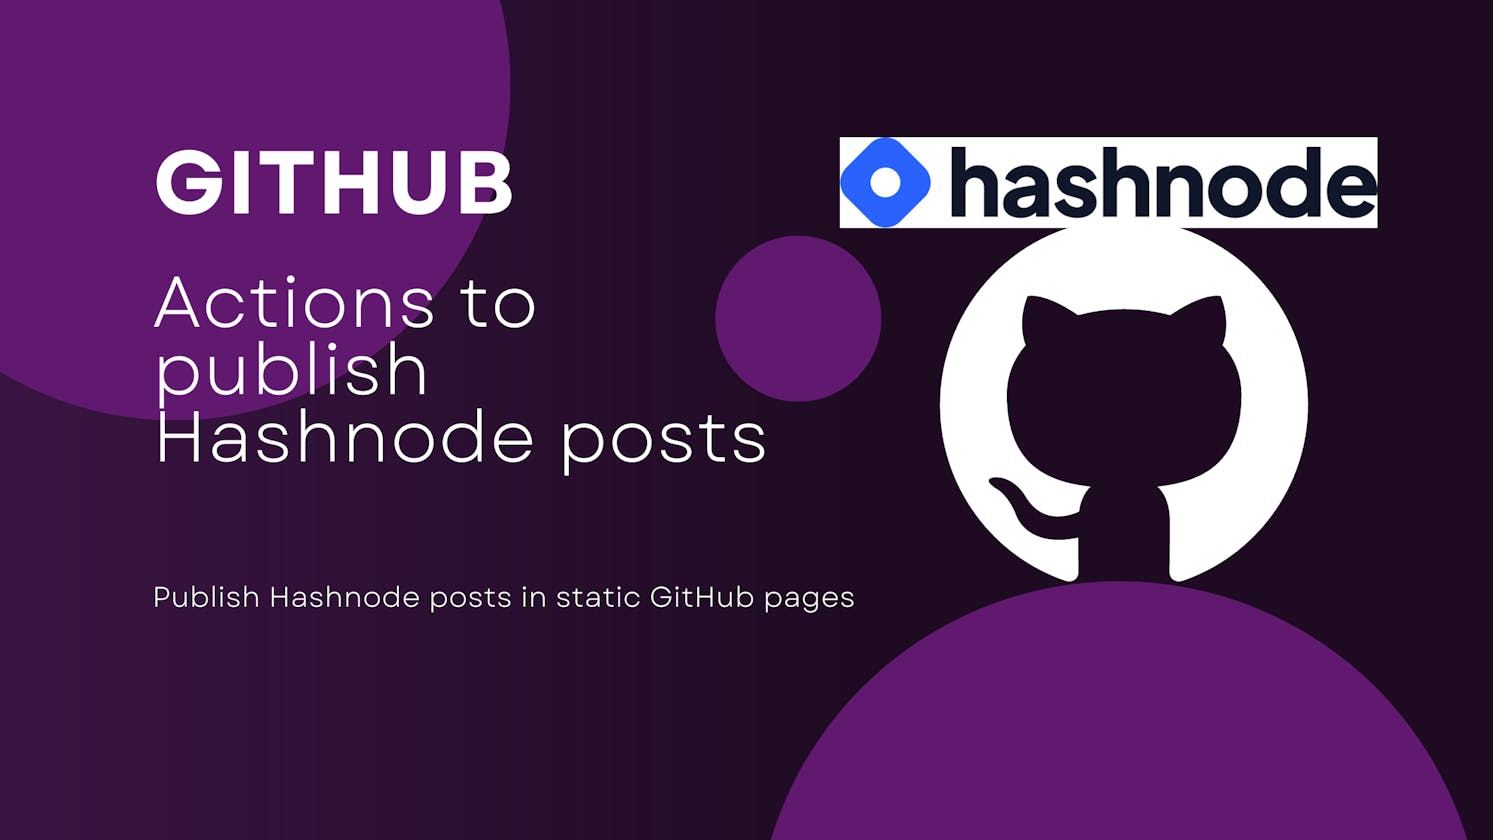 GITHUB: Actions to publish Hashnode posts